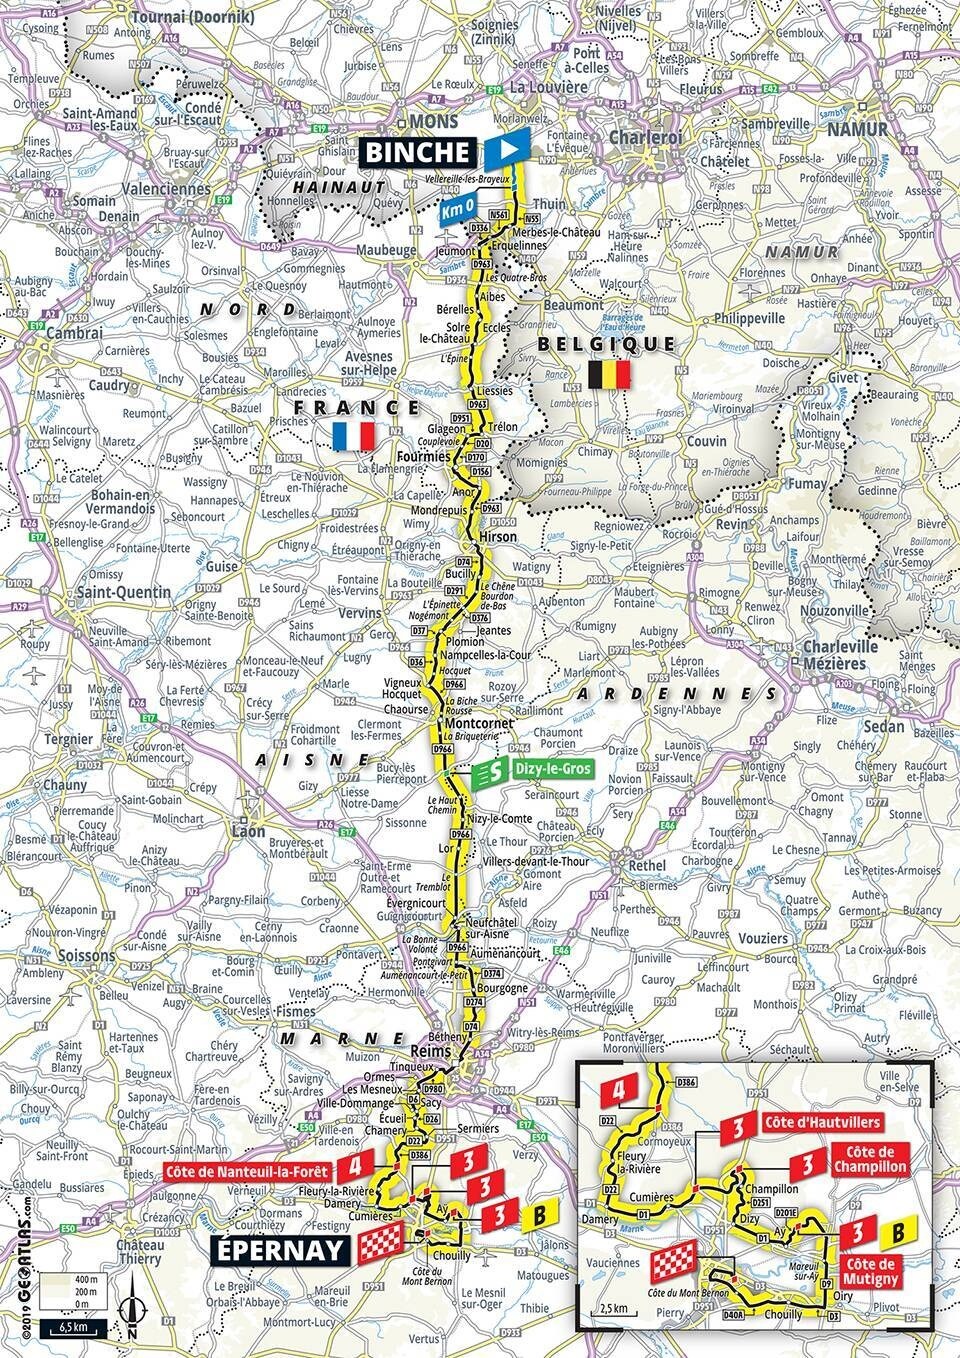 Tour de France 2019 - Planimetria Tappa 3